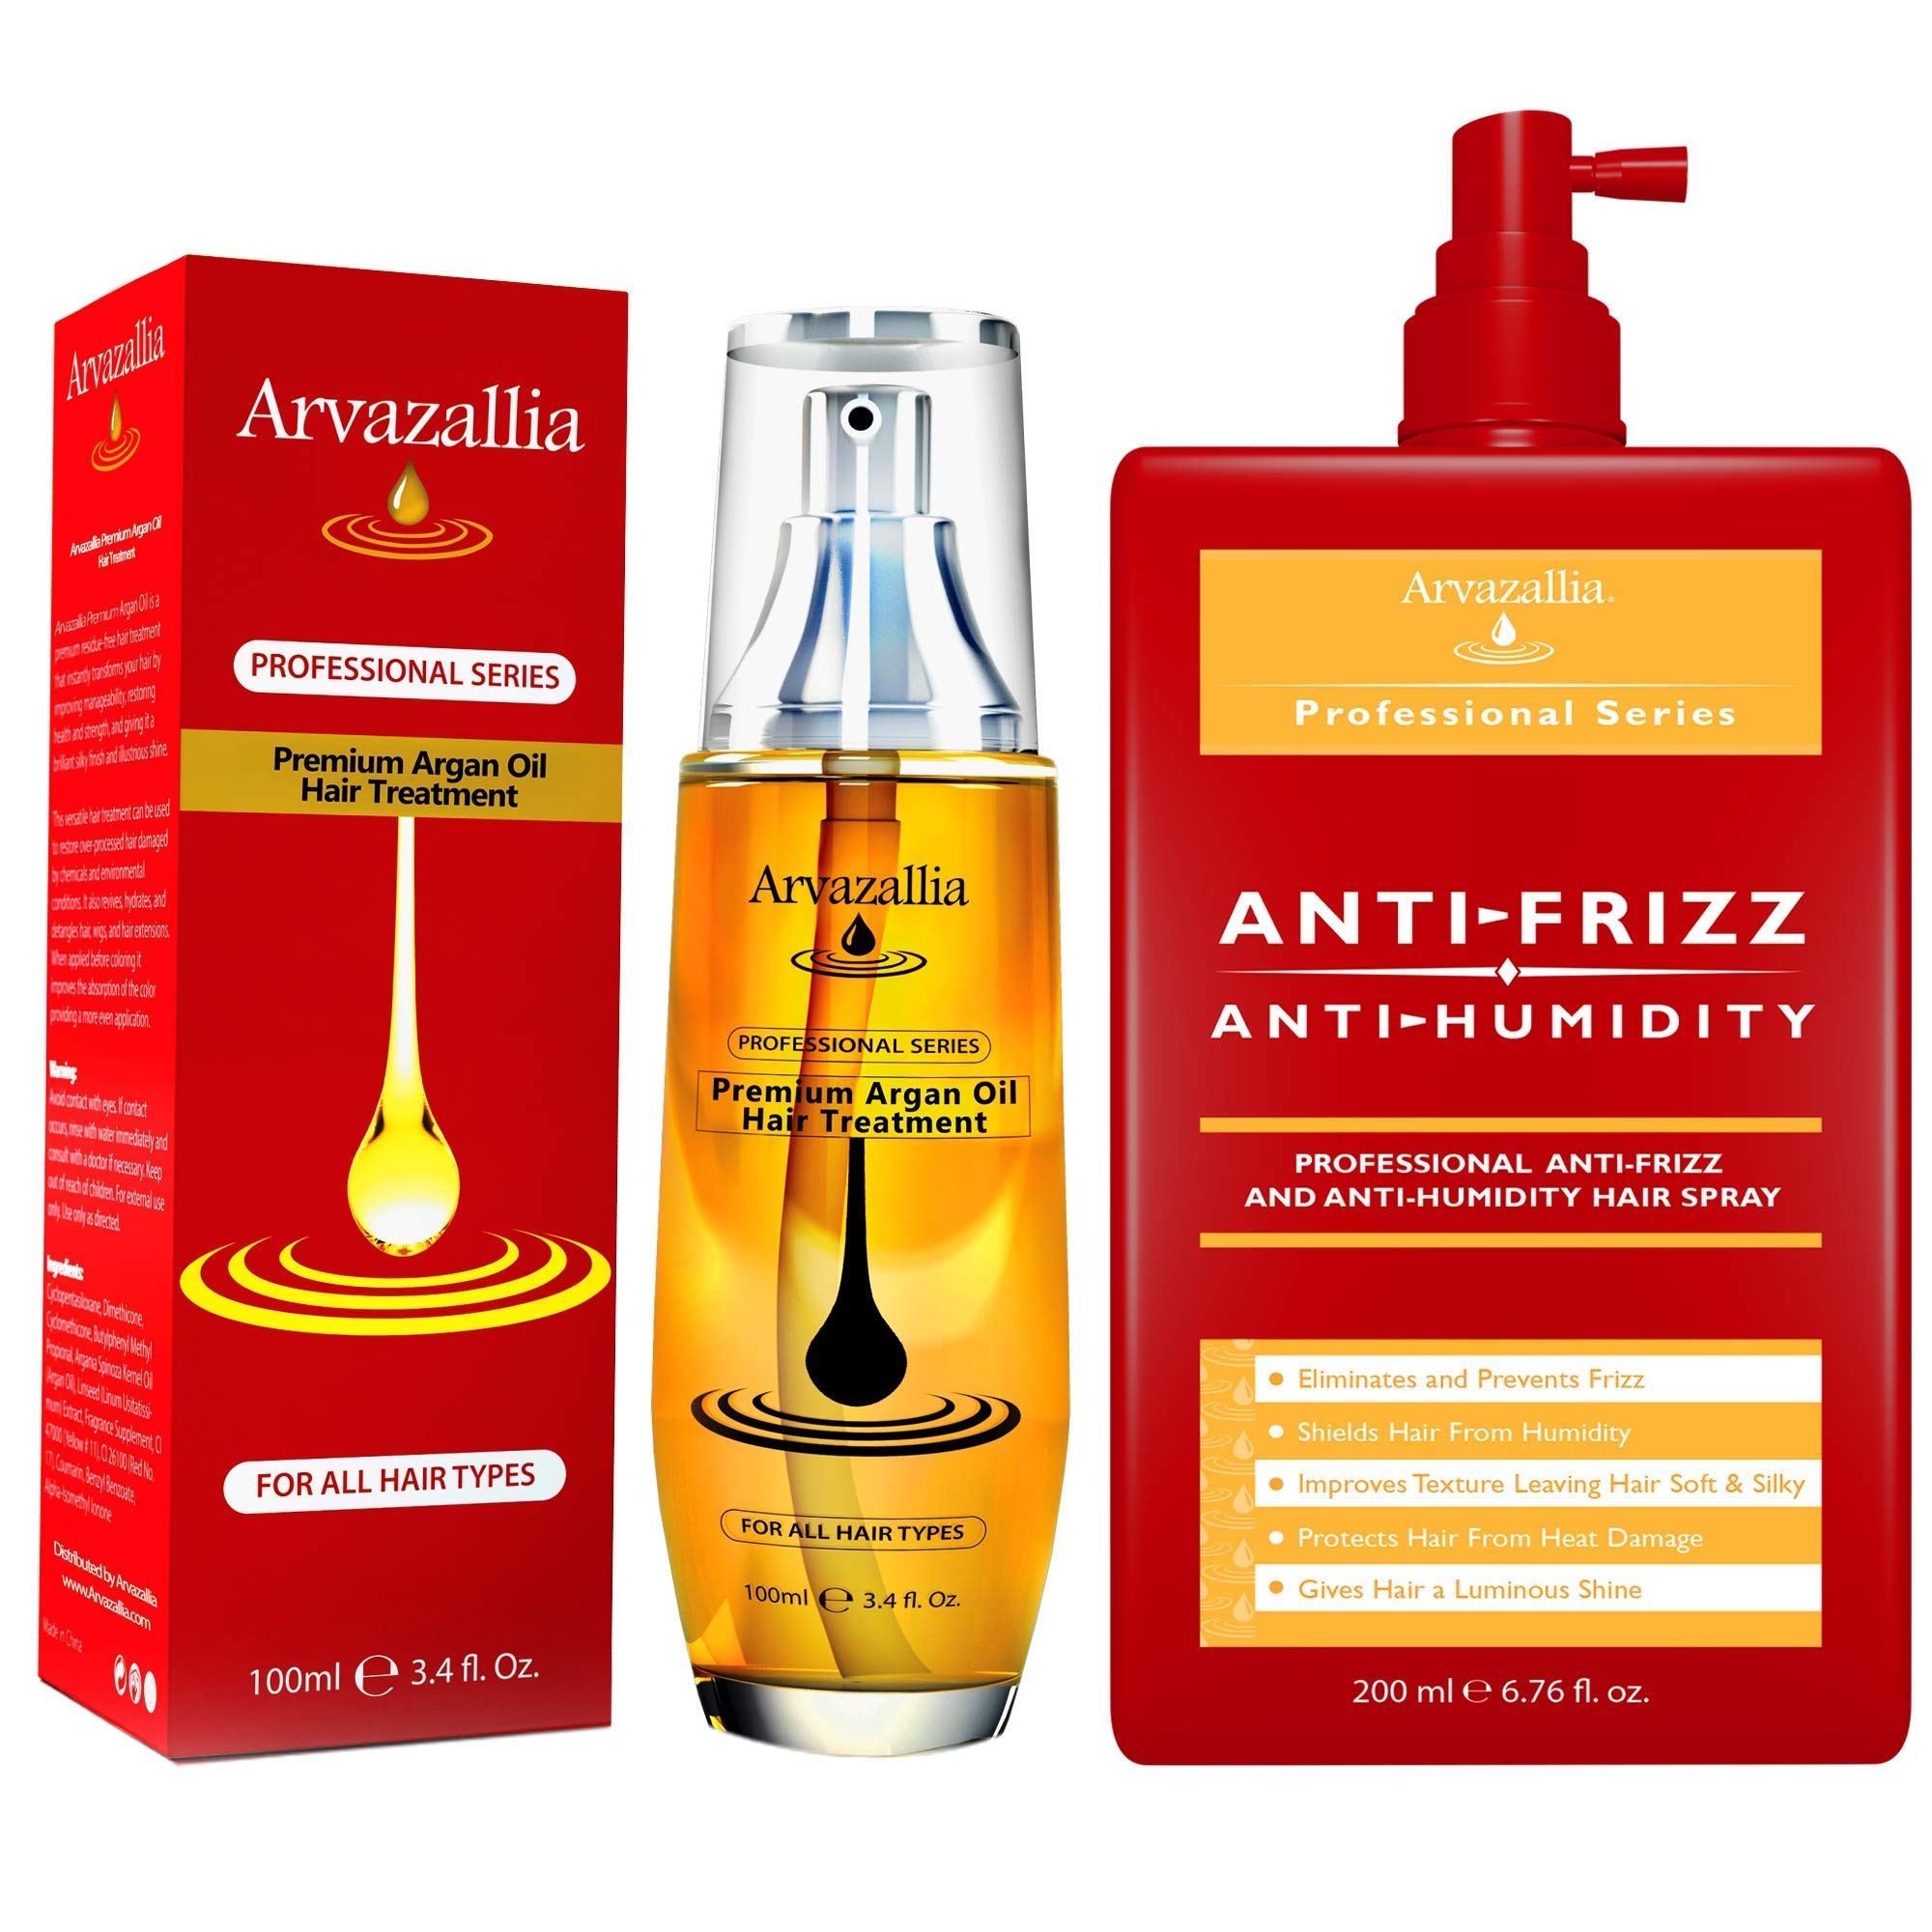 Premium Argan Oil Hair Treatment and Anti-Frizz & Anti-Humidity Hair Spray Bundle - For Gorgeous Soft, Silky, Shiny Hair that Lasts by Arvazallia